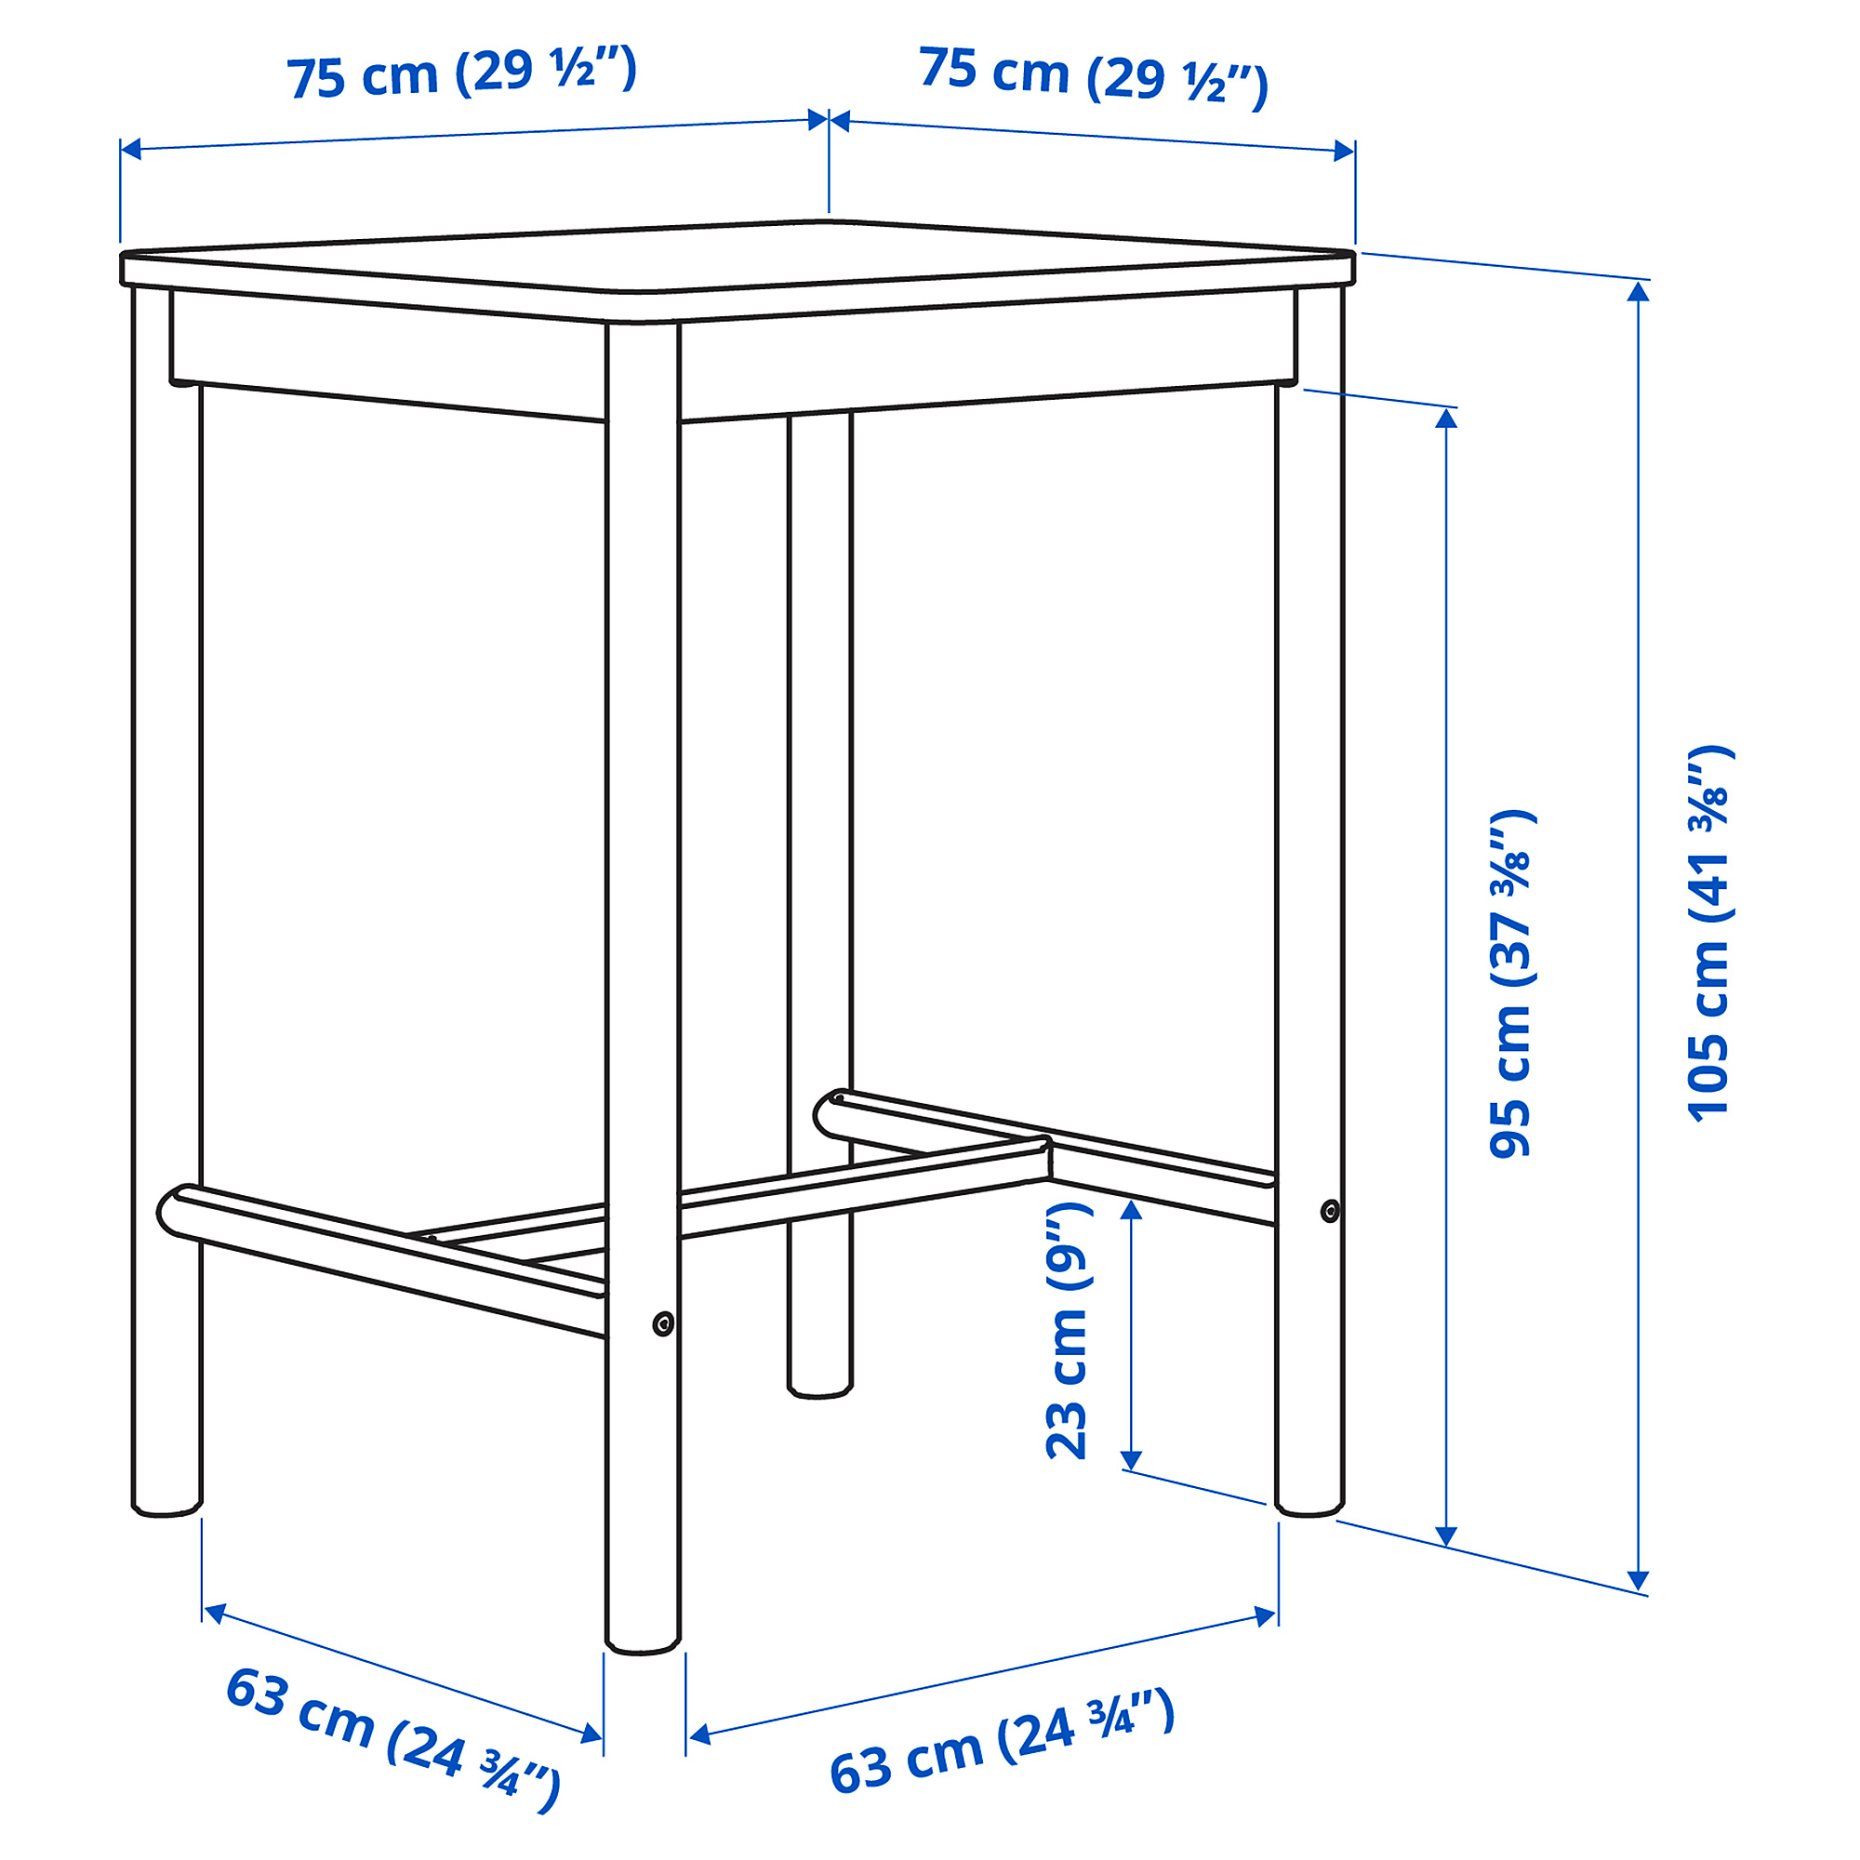 RÖNNINGE, bar table, 75x75 cm, 505.112.30